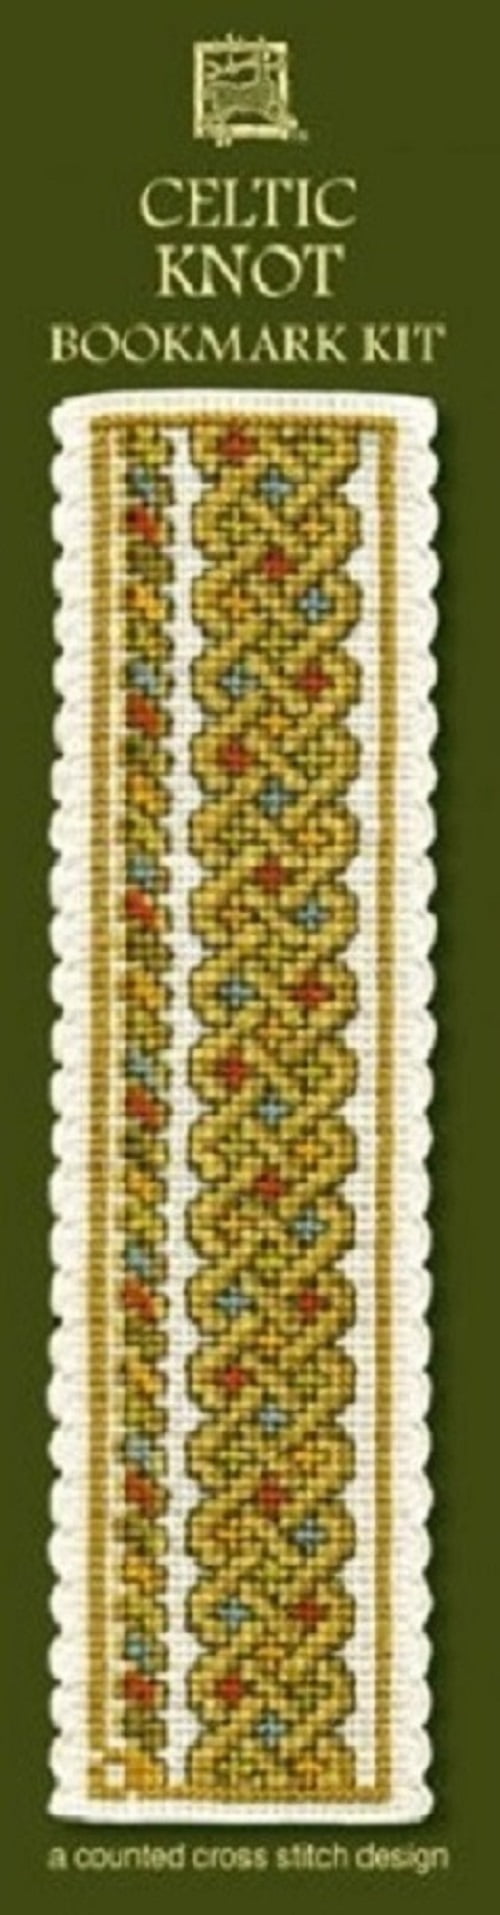 Celtic Cross Stitch Bookmark Kit 